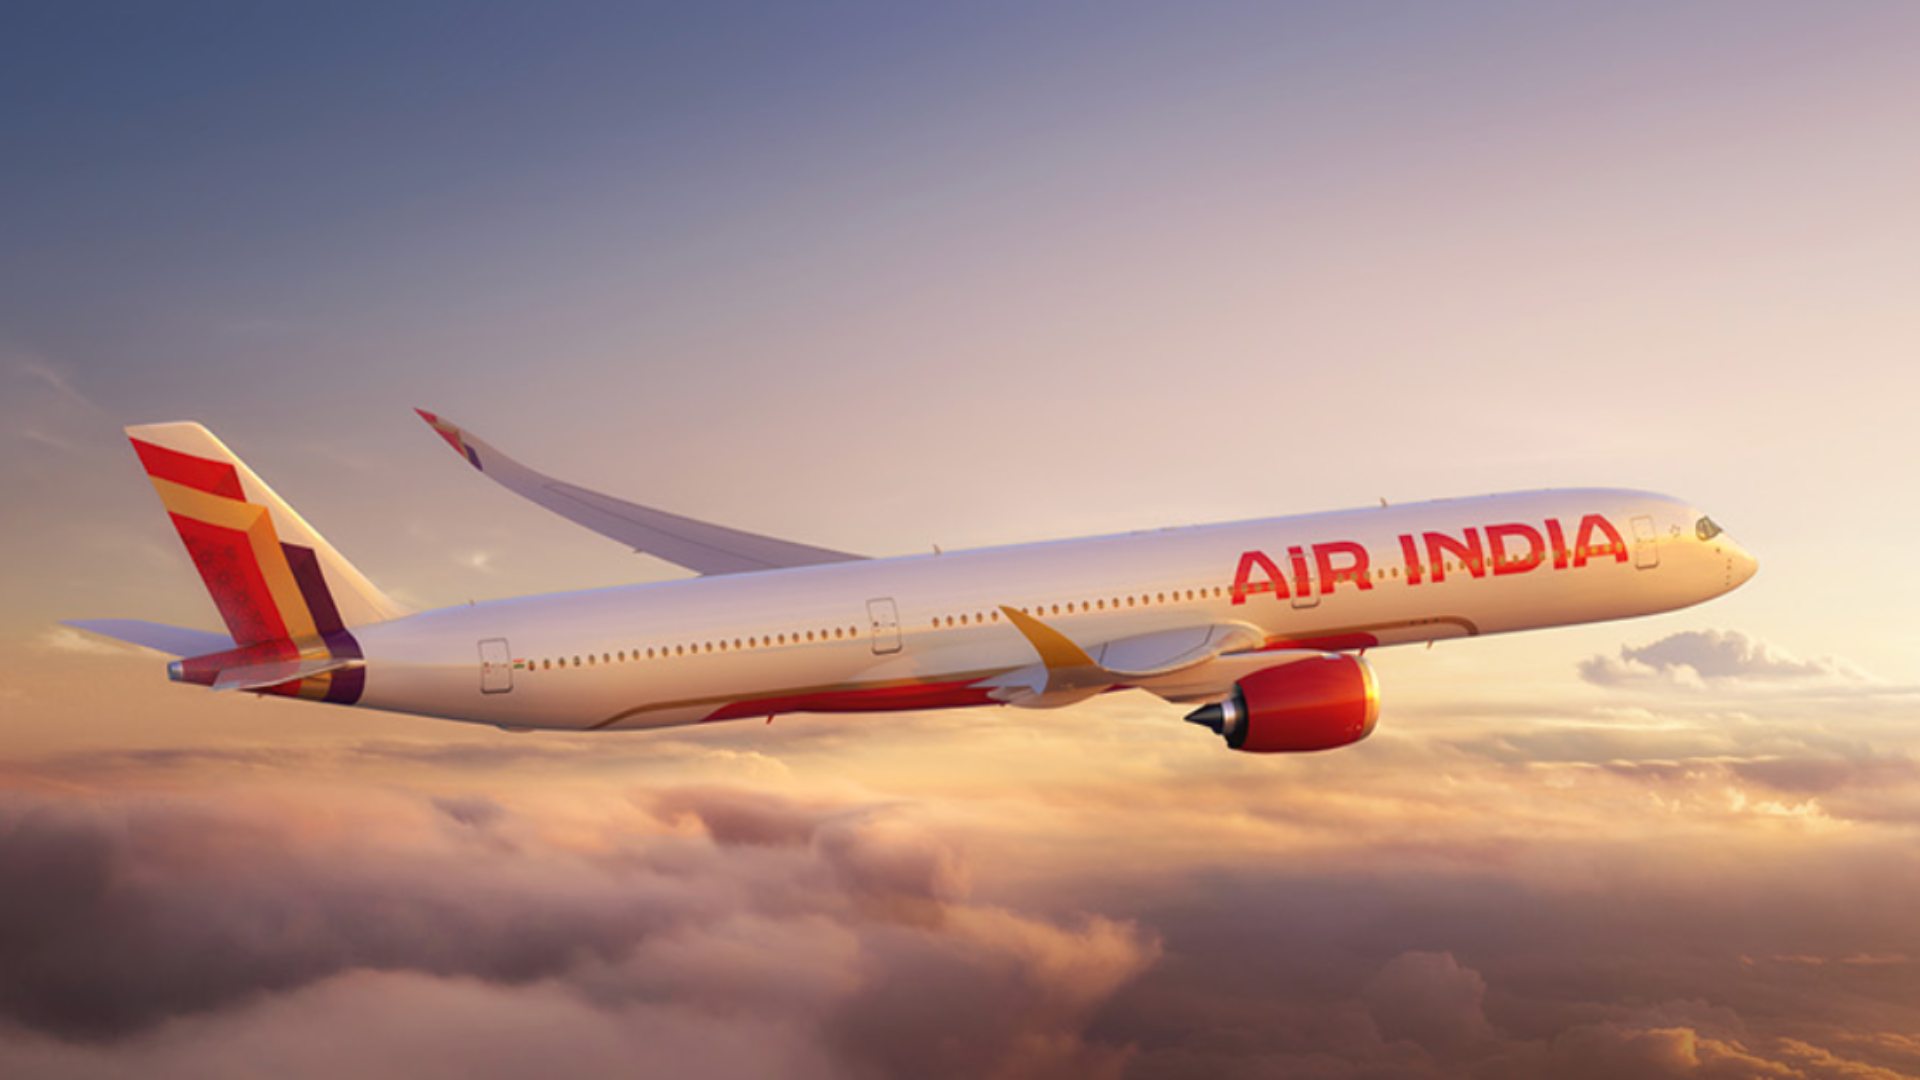 Air India Halts Tel Aviv Flights Until April 30 Amid Middle East Tensions